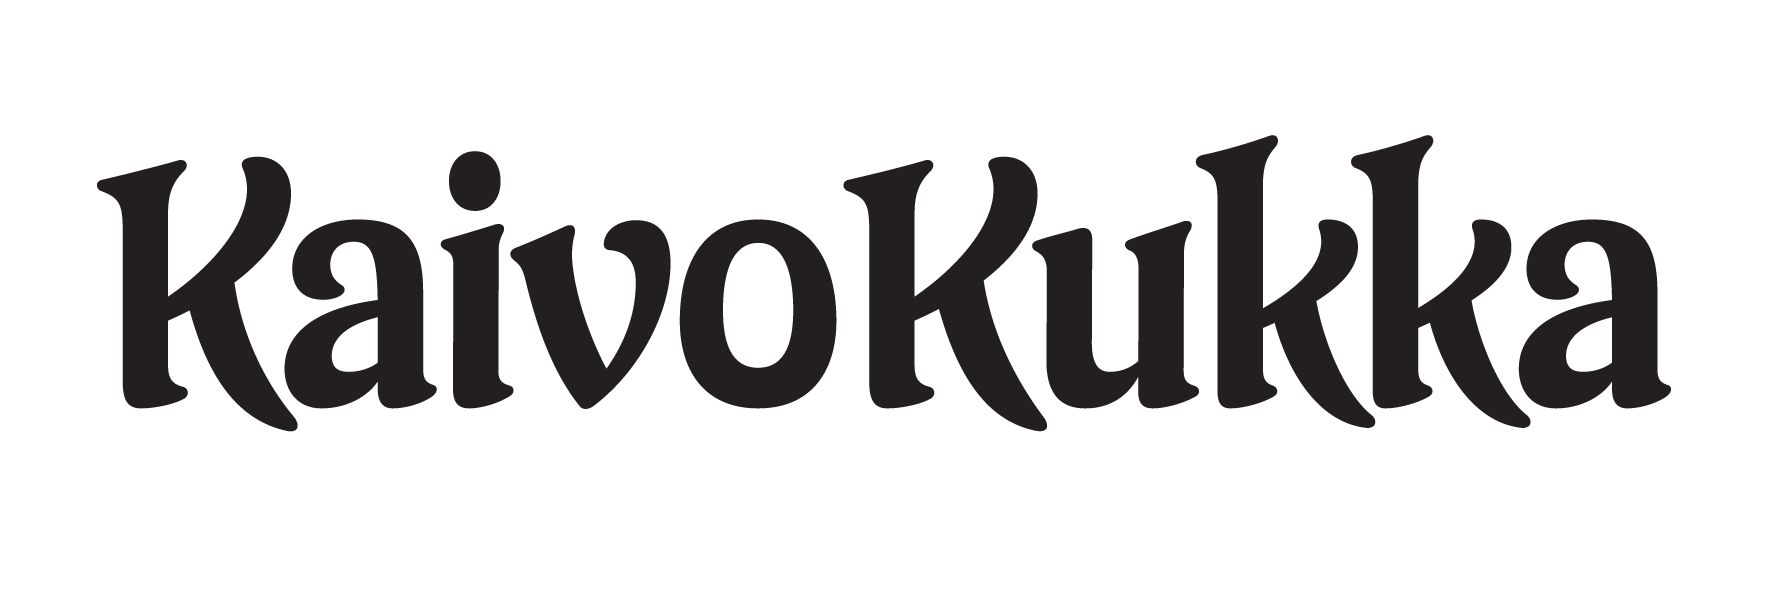 KaivoKukka logo